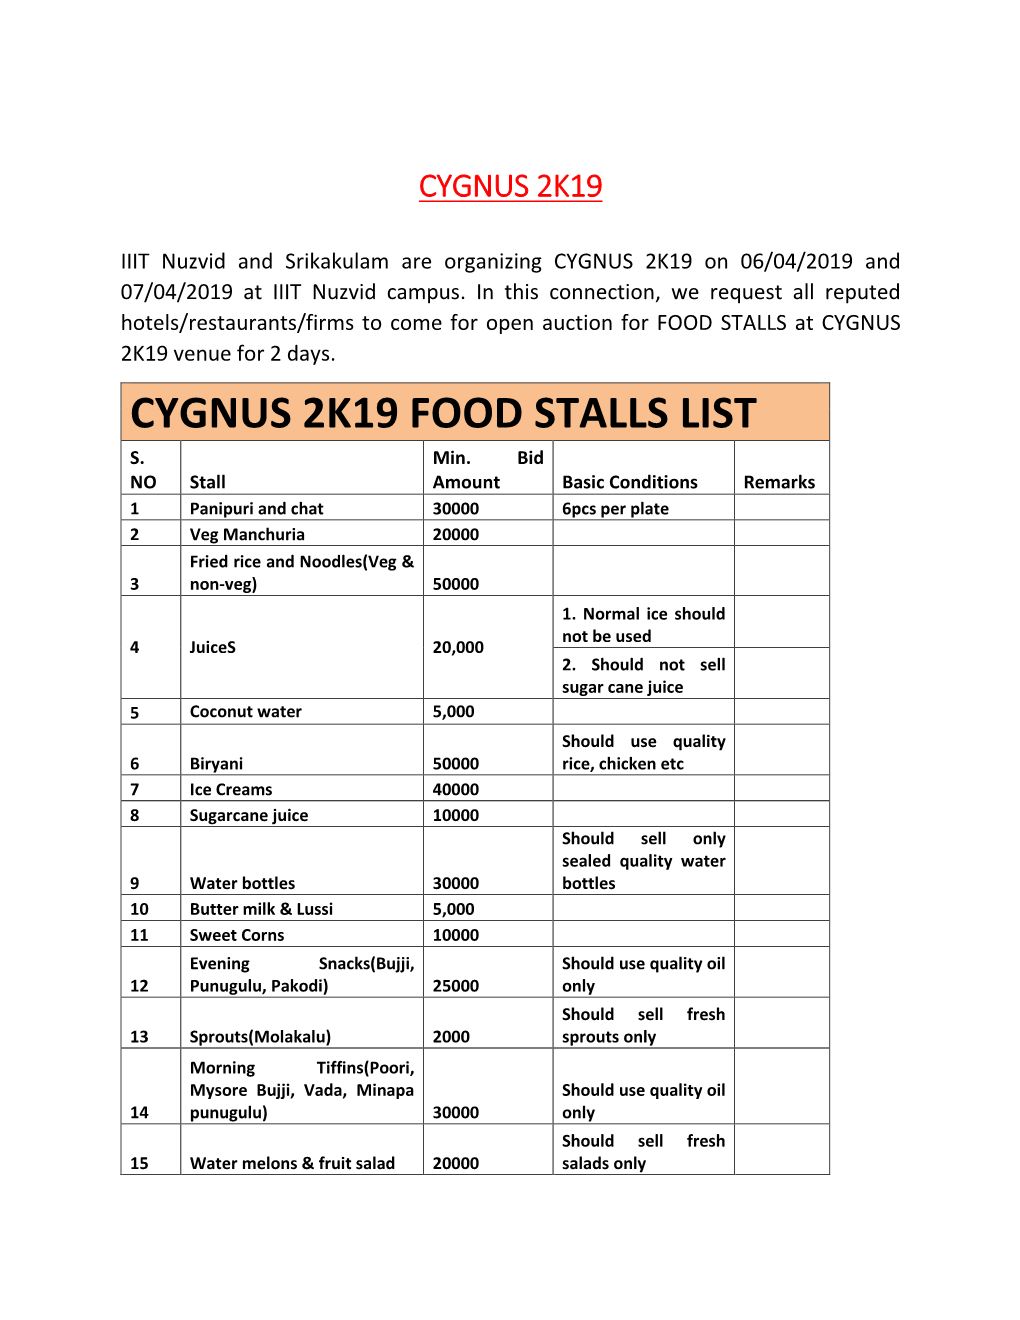 Cygnus 2K19 Food Stalls List S